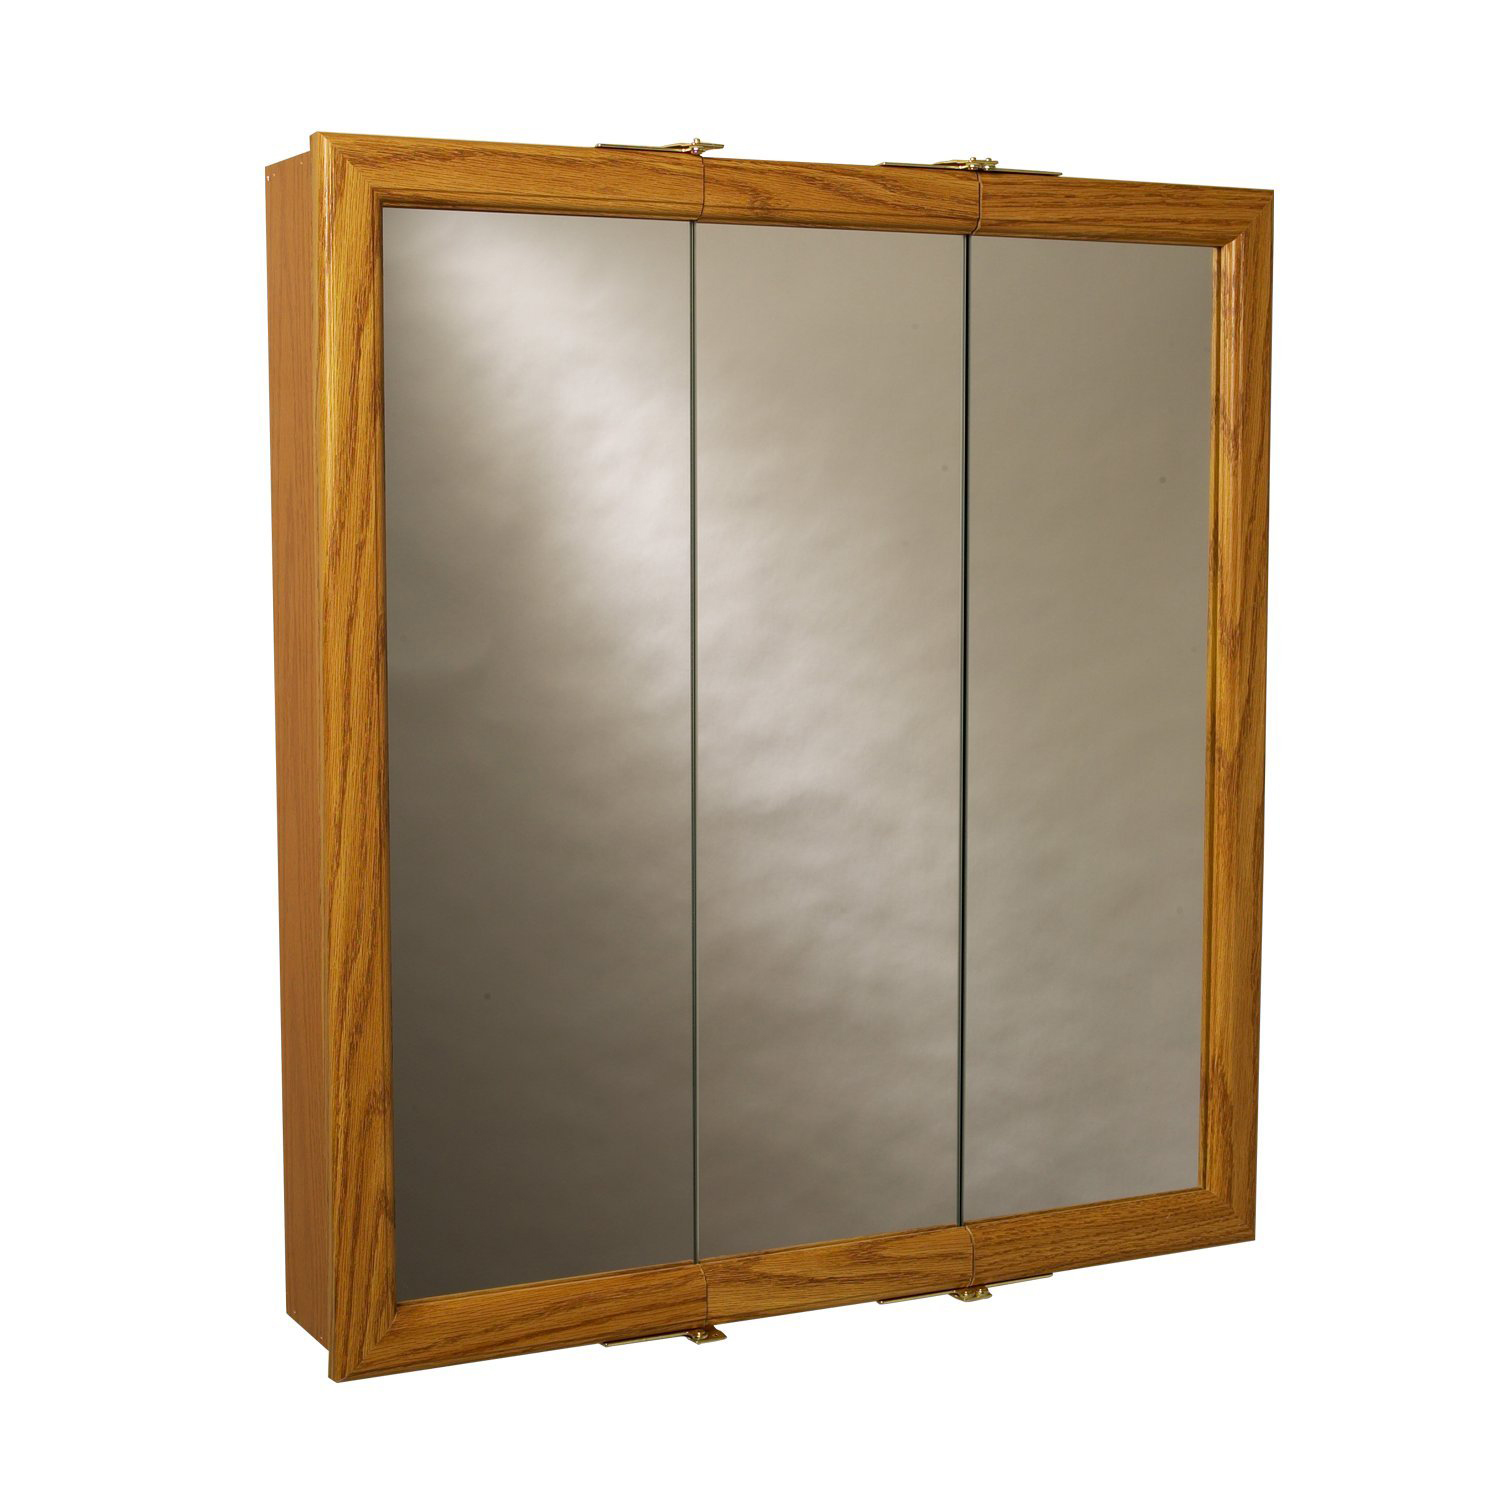 Tri-View Medicine Cabinet 29-5/8"x25-3/4"x4-1/2" Wood Body Oak Frame